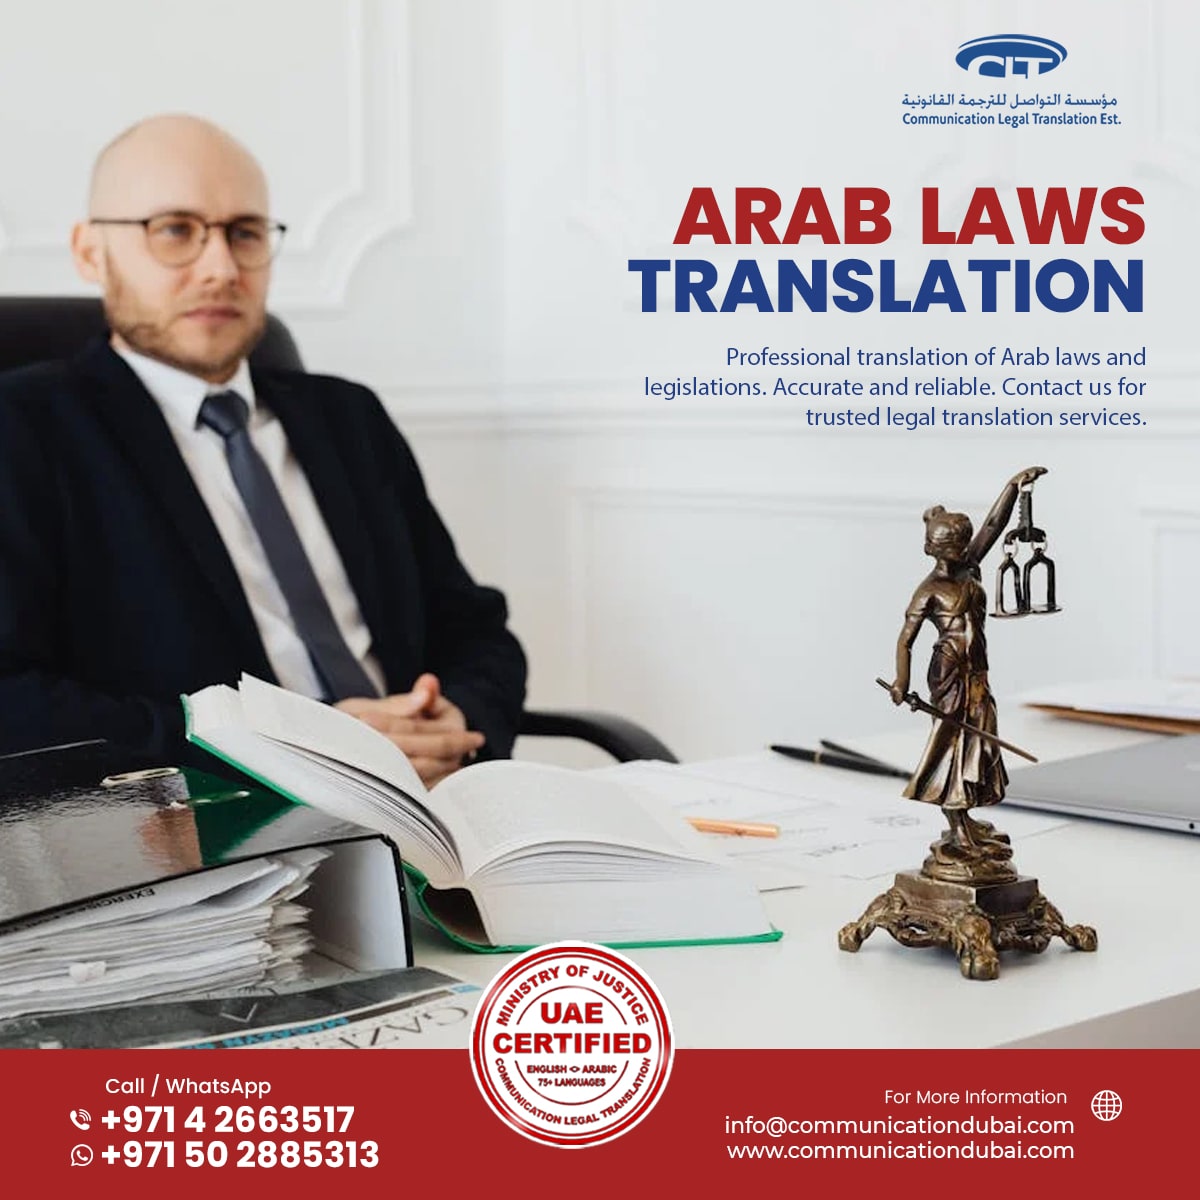 Arab Laws Translation Services

Contact us for a quote!
📞 +971 502885313
📧 info@communicationdubai.com
🌐 communicationdubai.com/translation-of…

#LegalTranslation #LawTranslation #TranslateLaws